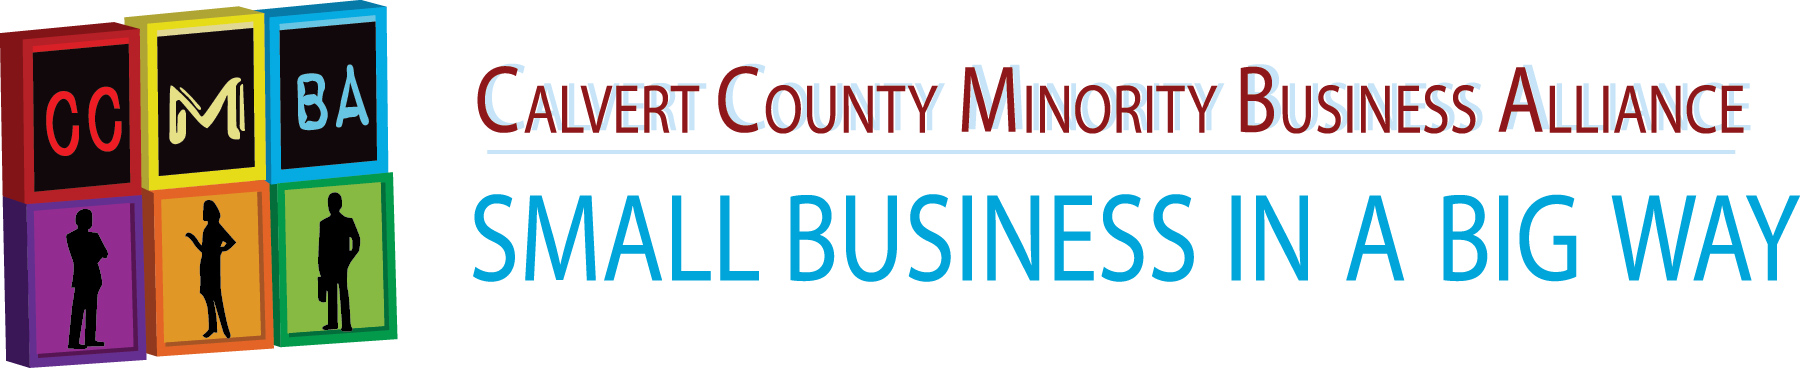 Calvert County Minority Business Alliance